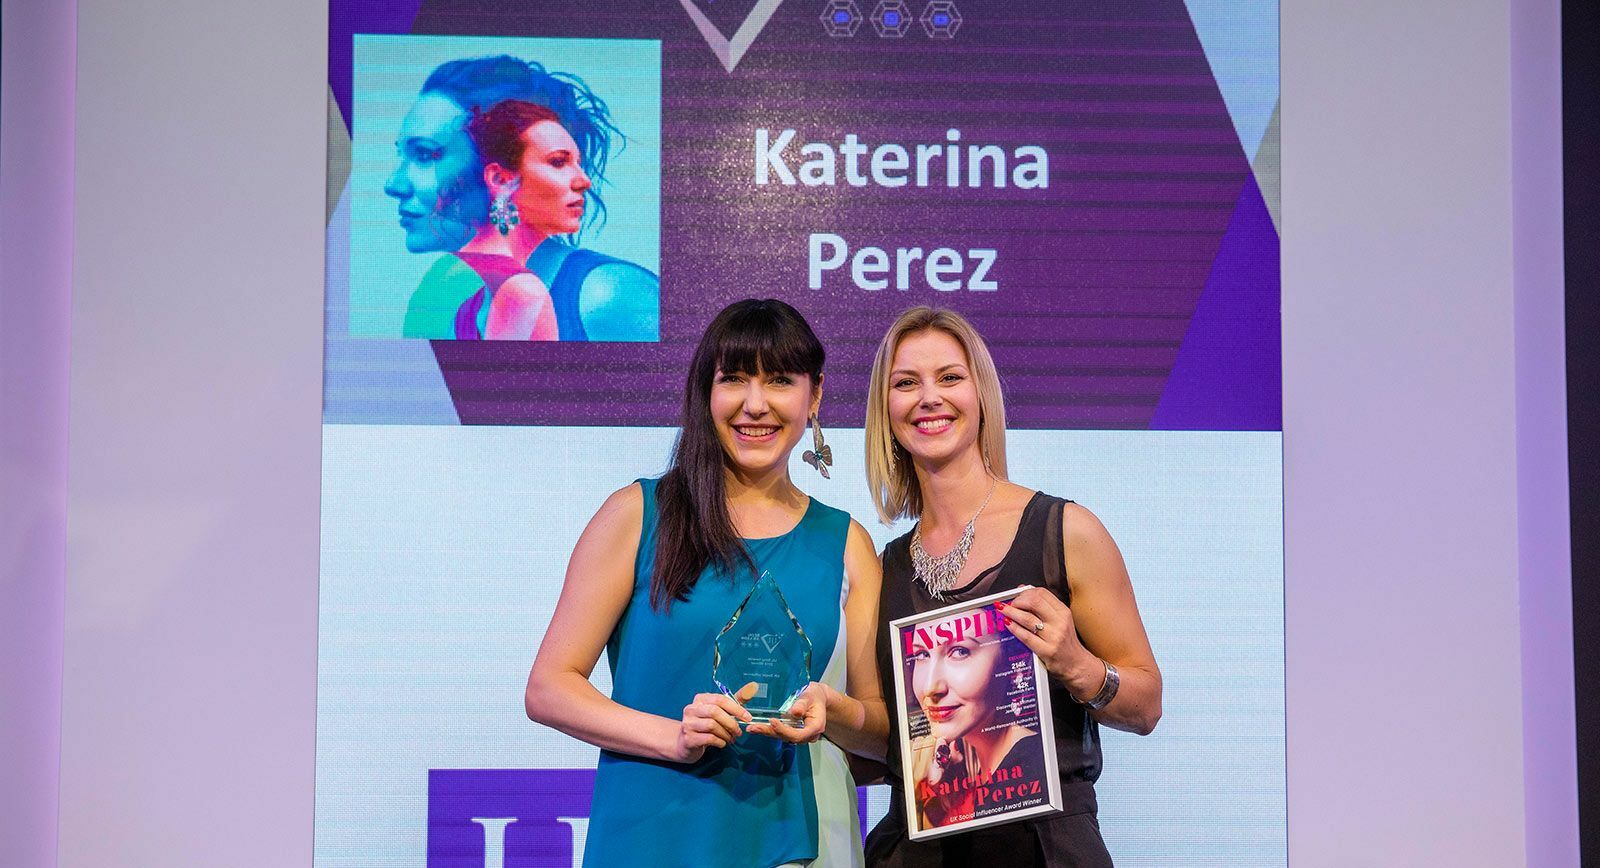 KaterinaPerez.com wins the IJL best UK Social Media influencer award